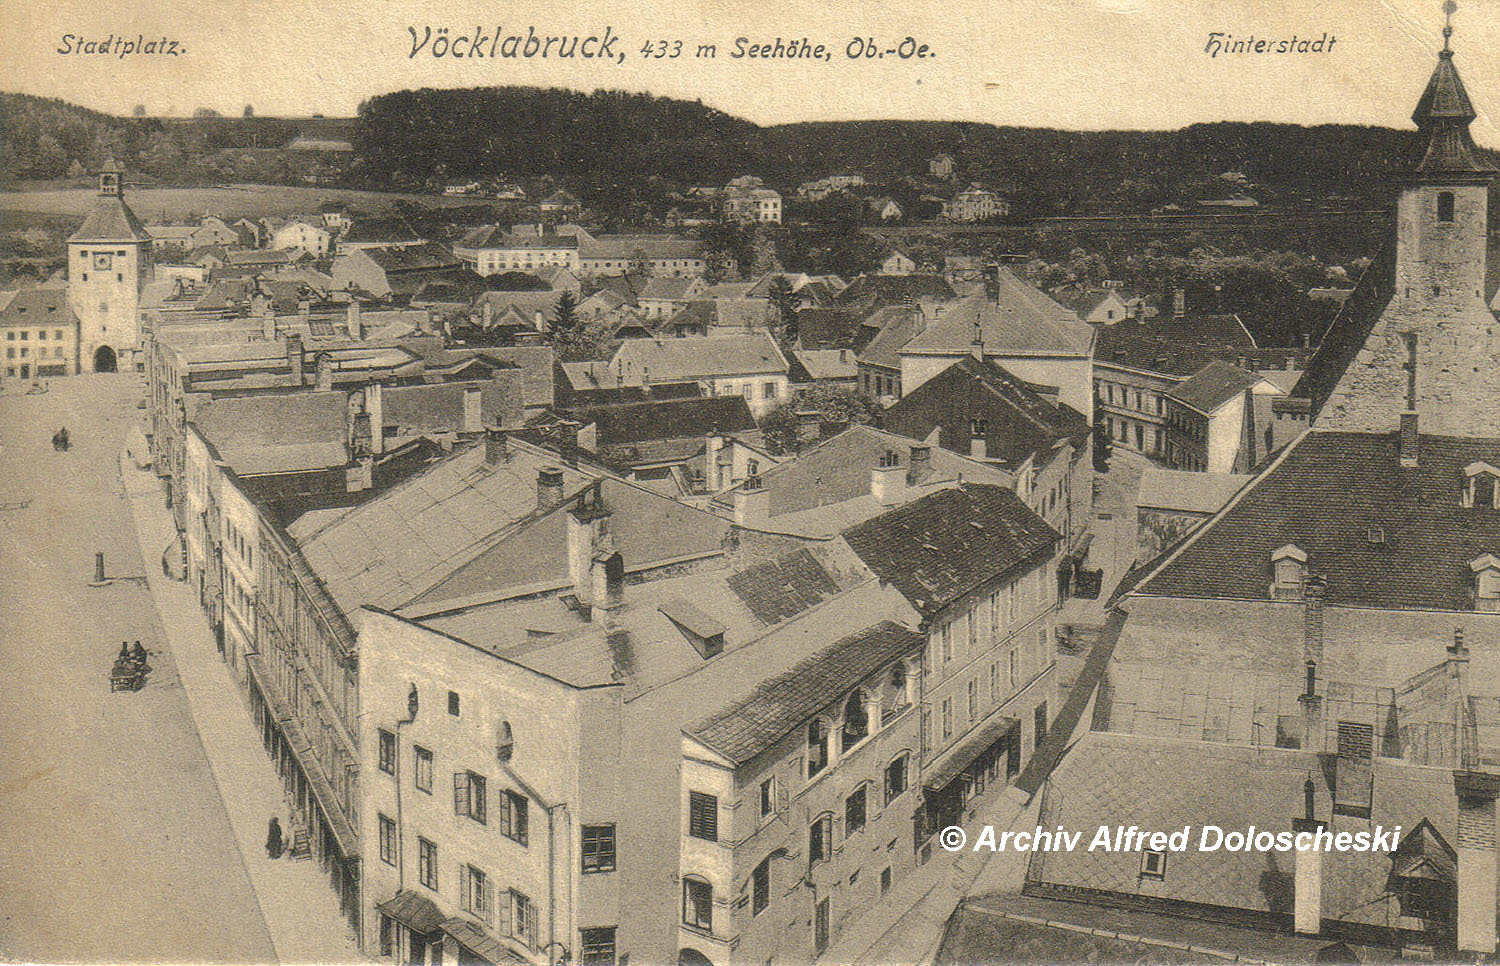 Blick Stadtplatz und Hinterstadt Vöcklabruck 1920